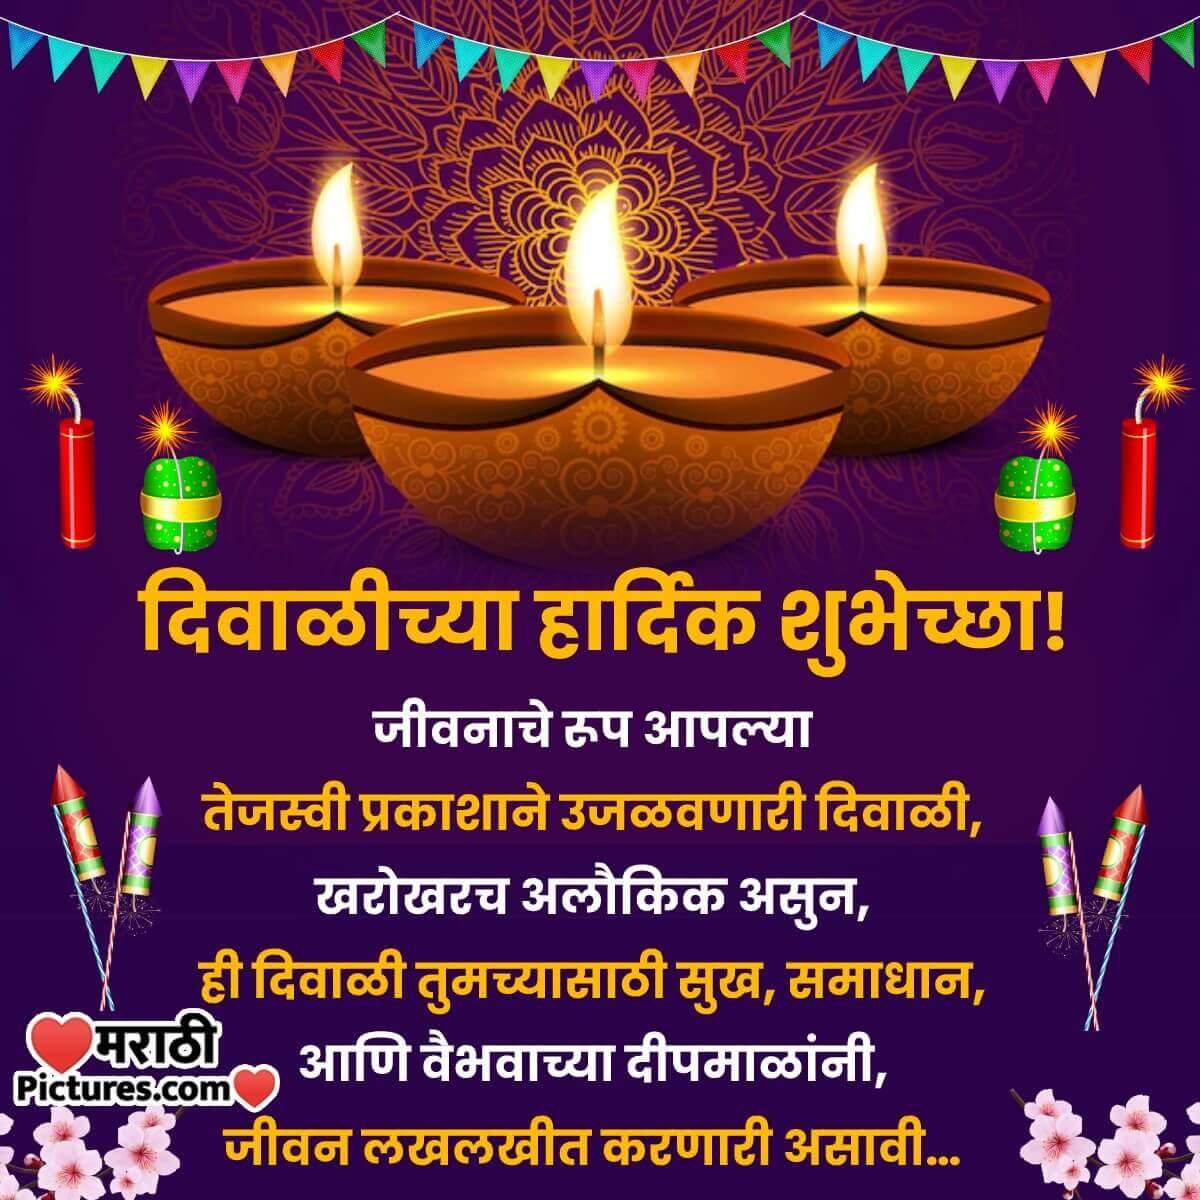 Happy Diwali Greeting Image - MarathiPictures.com